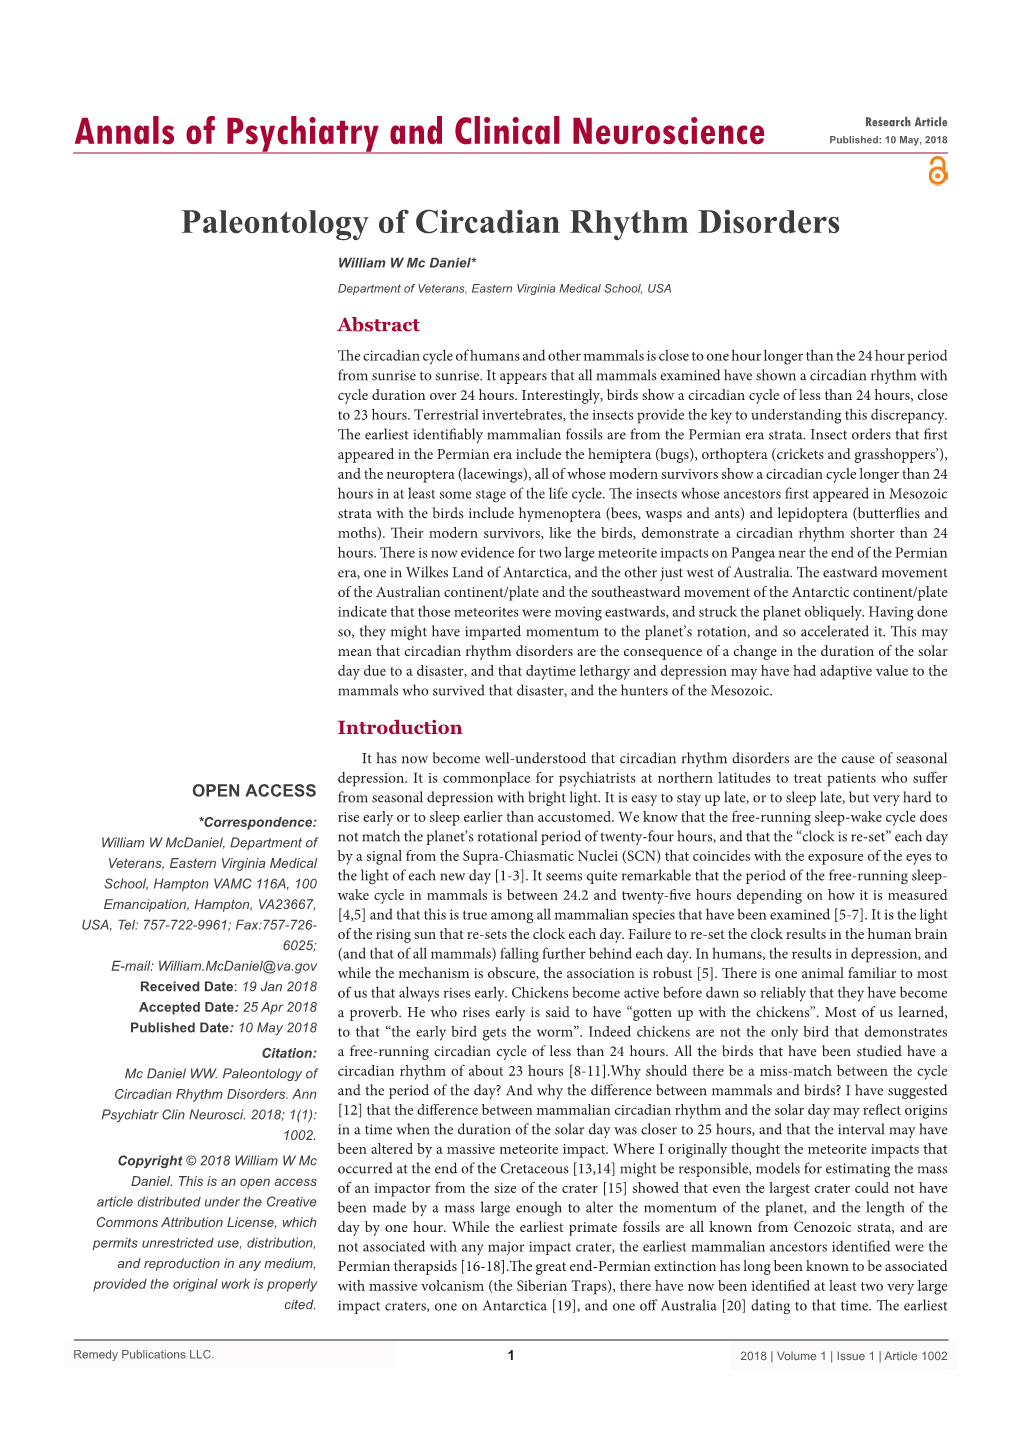 Paleontology of Circadian Rhythm Disorders